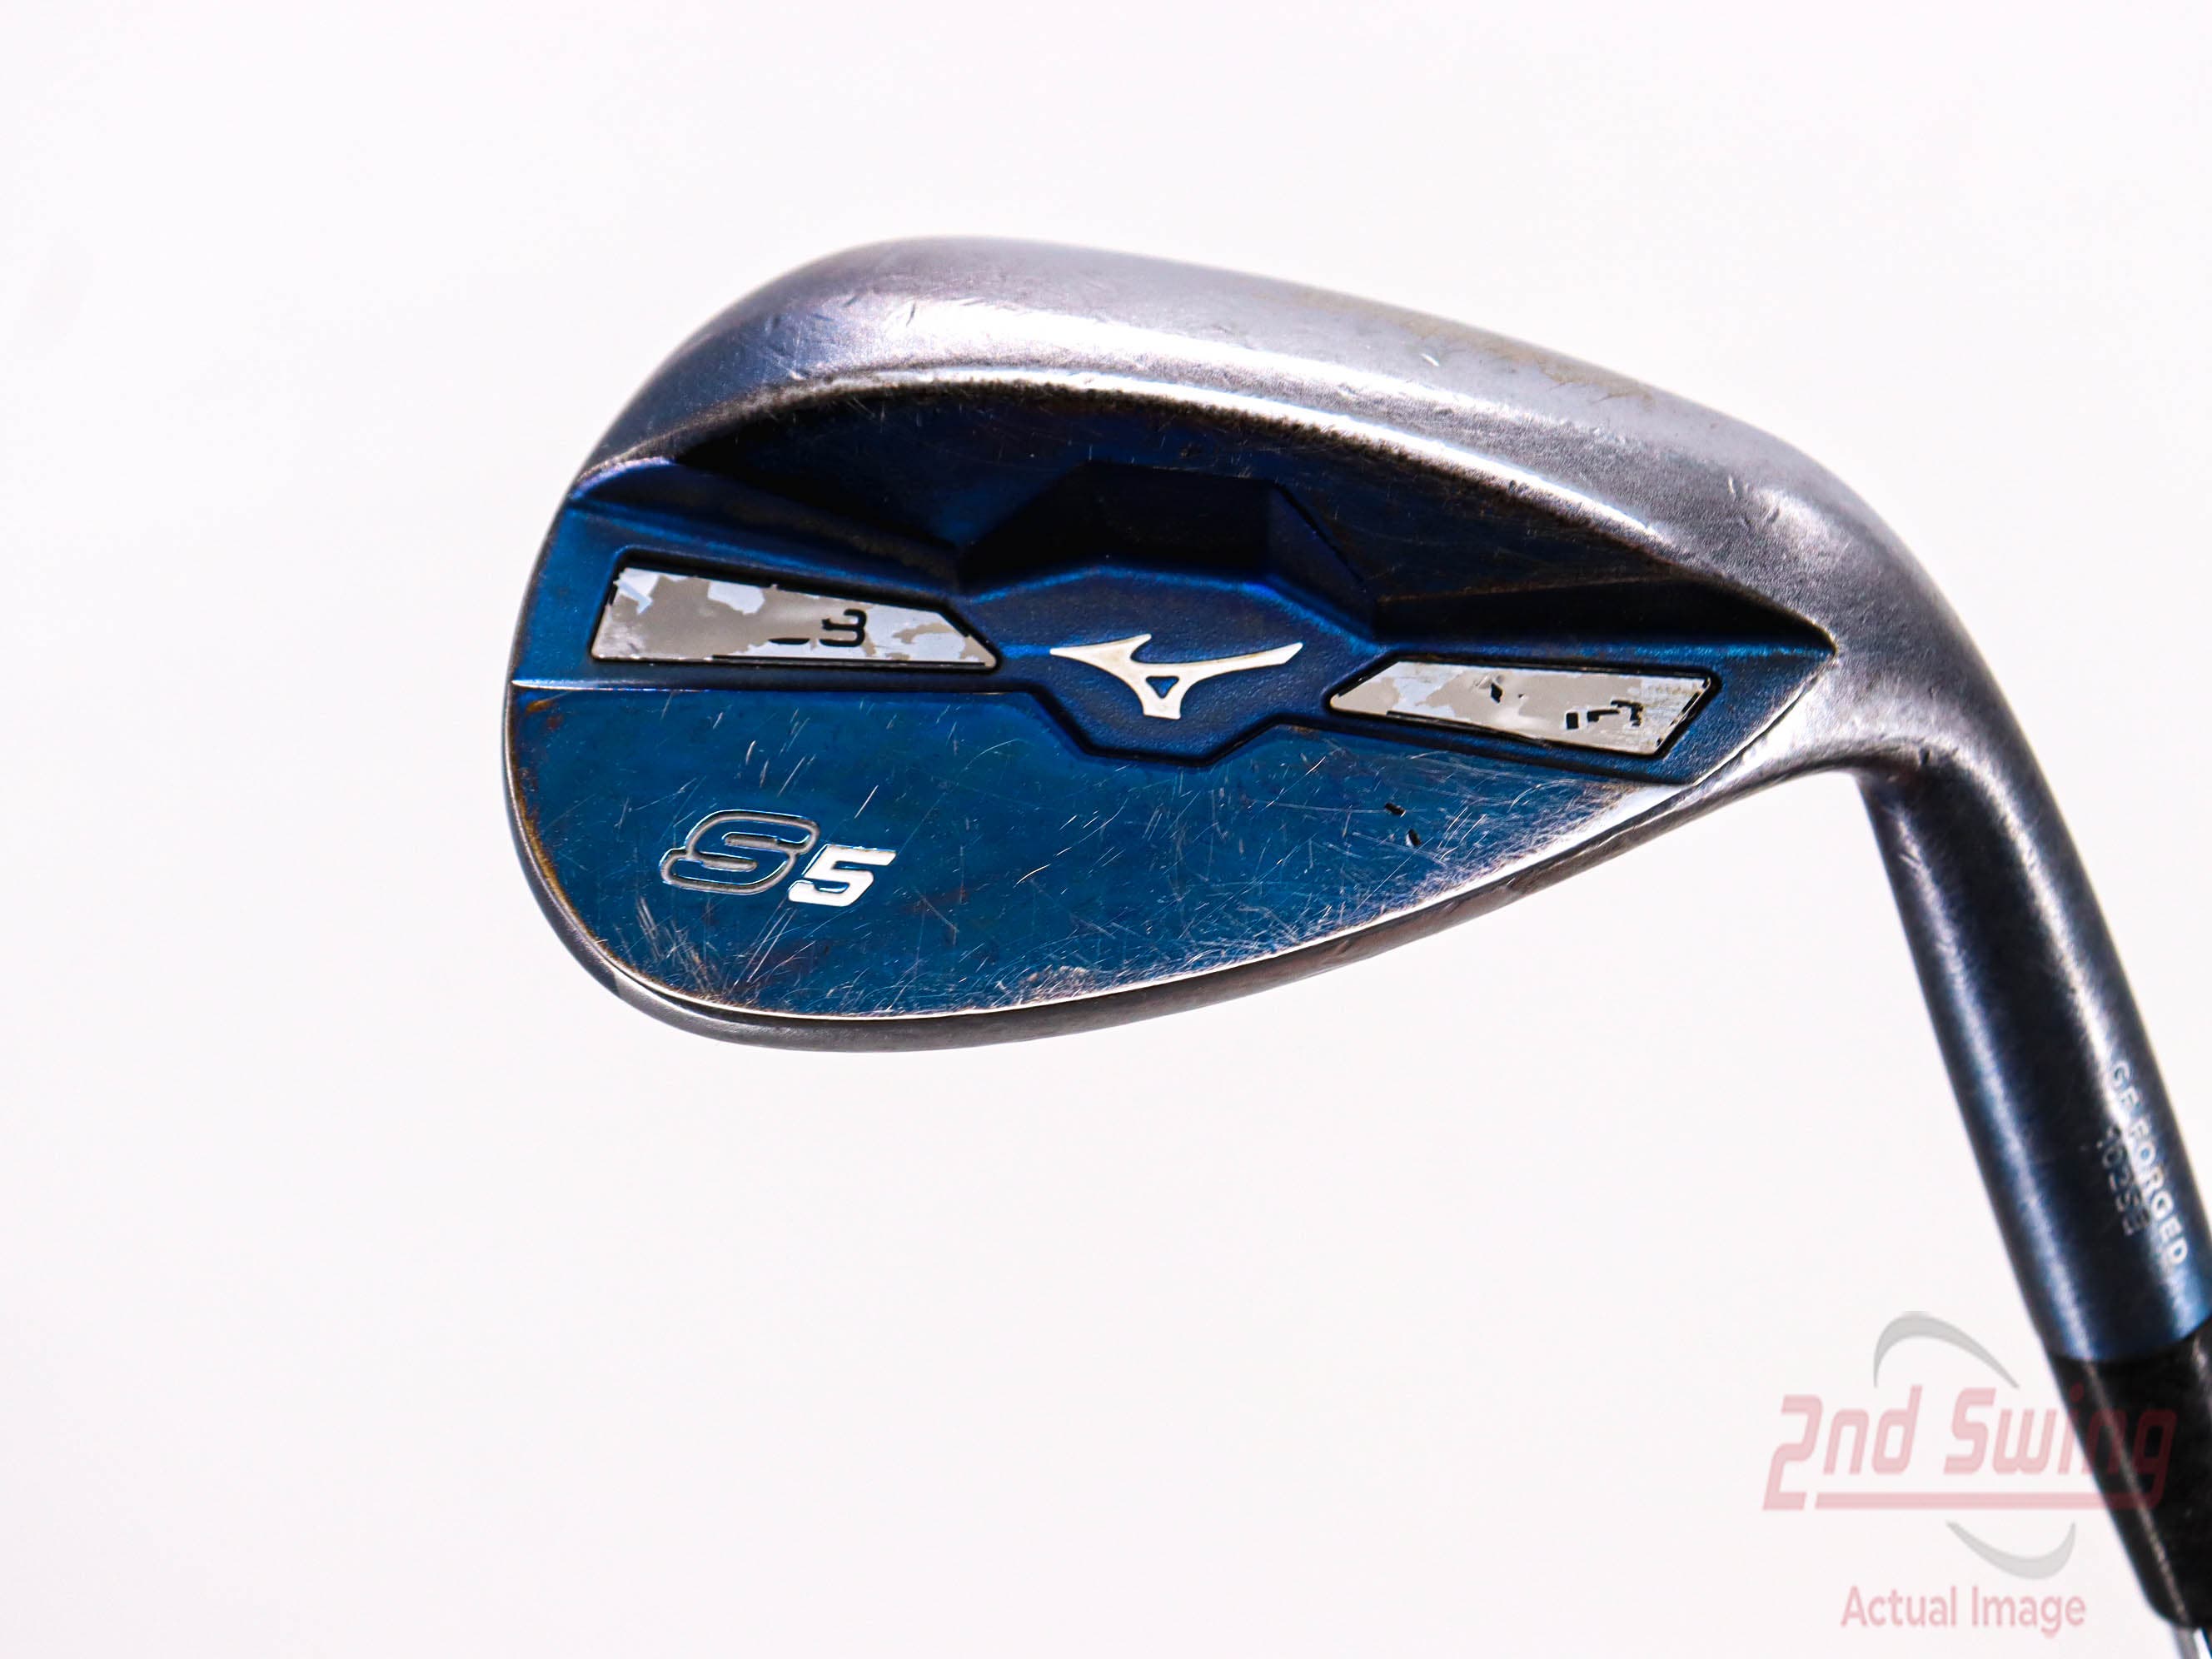 Mizuno S5 Blue Ion Wedge | 2nd Swing Golf